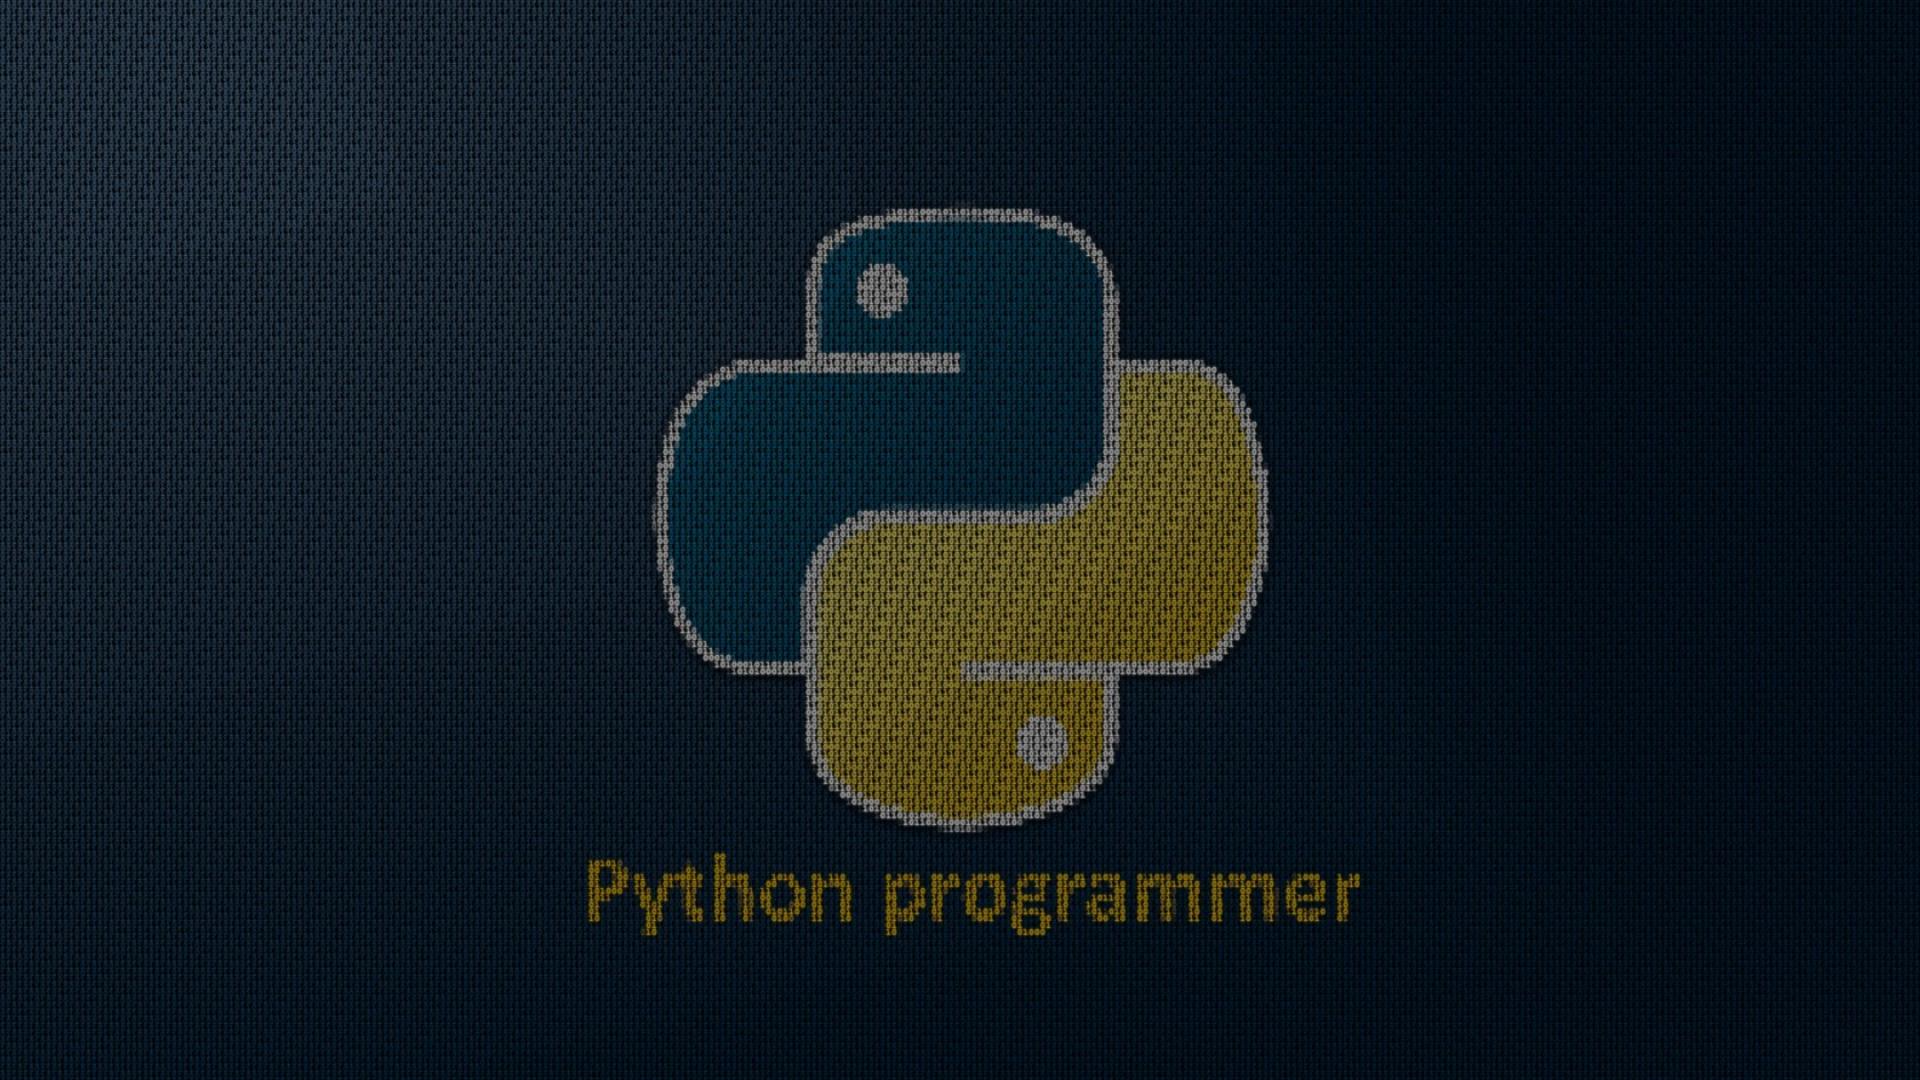 Python programmer wallpaper 56334